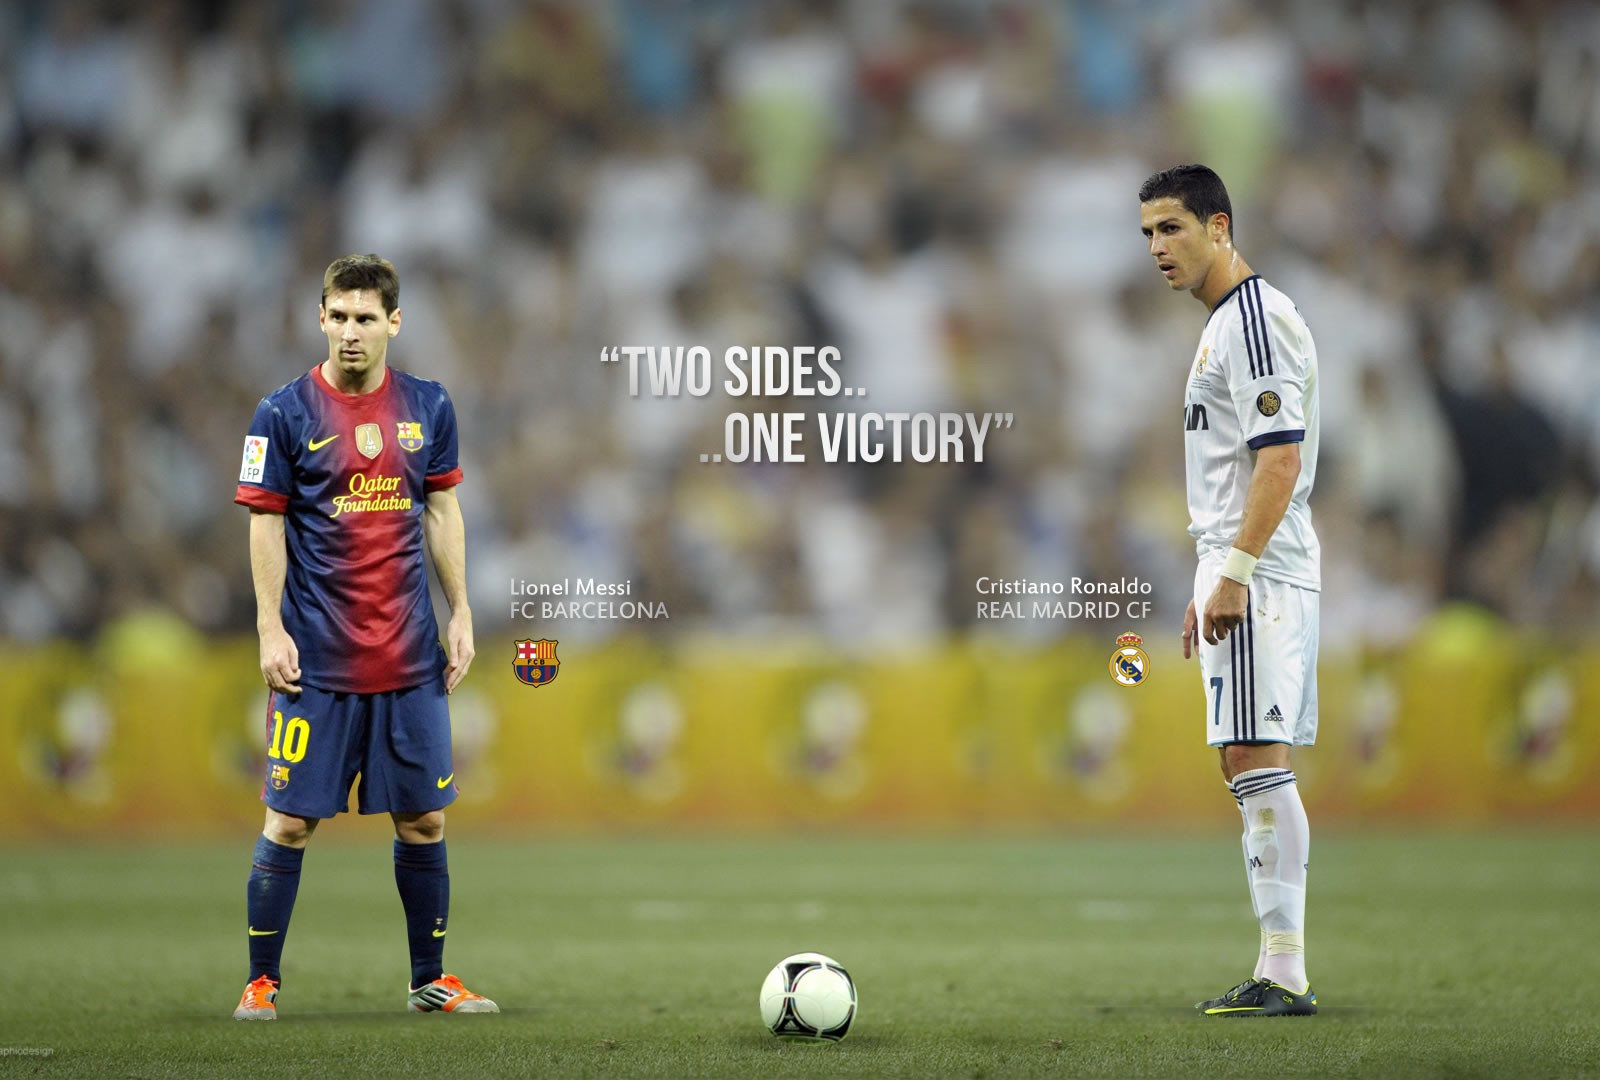 Ronaldo and Messi wallpaper by Drifter765 - Cristiano Ronaldo Wallpapers